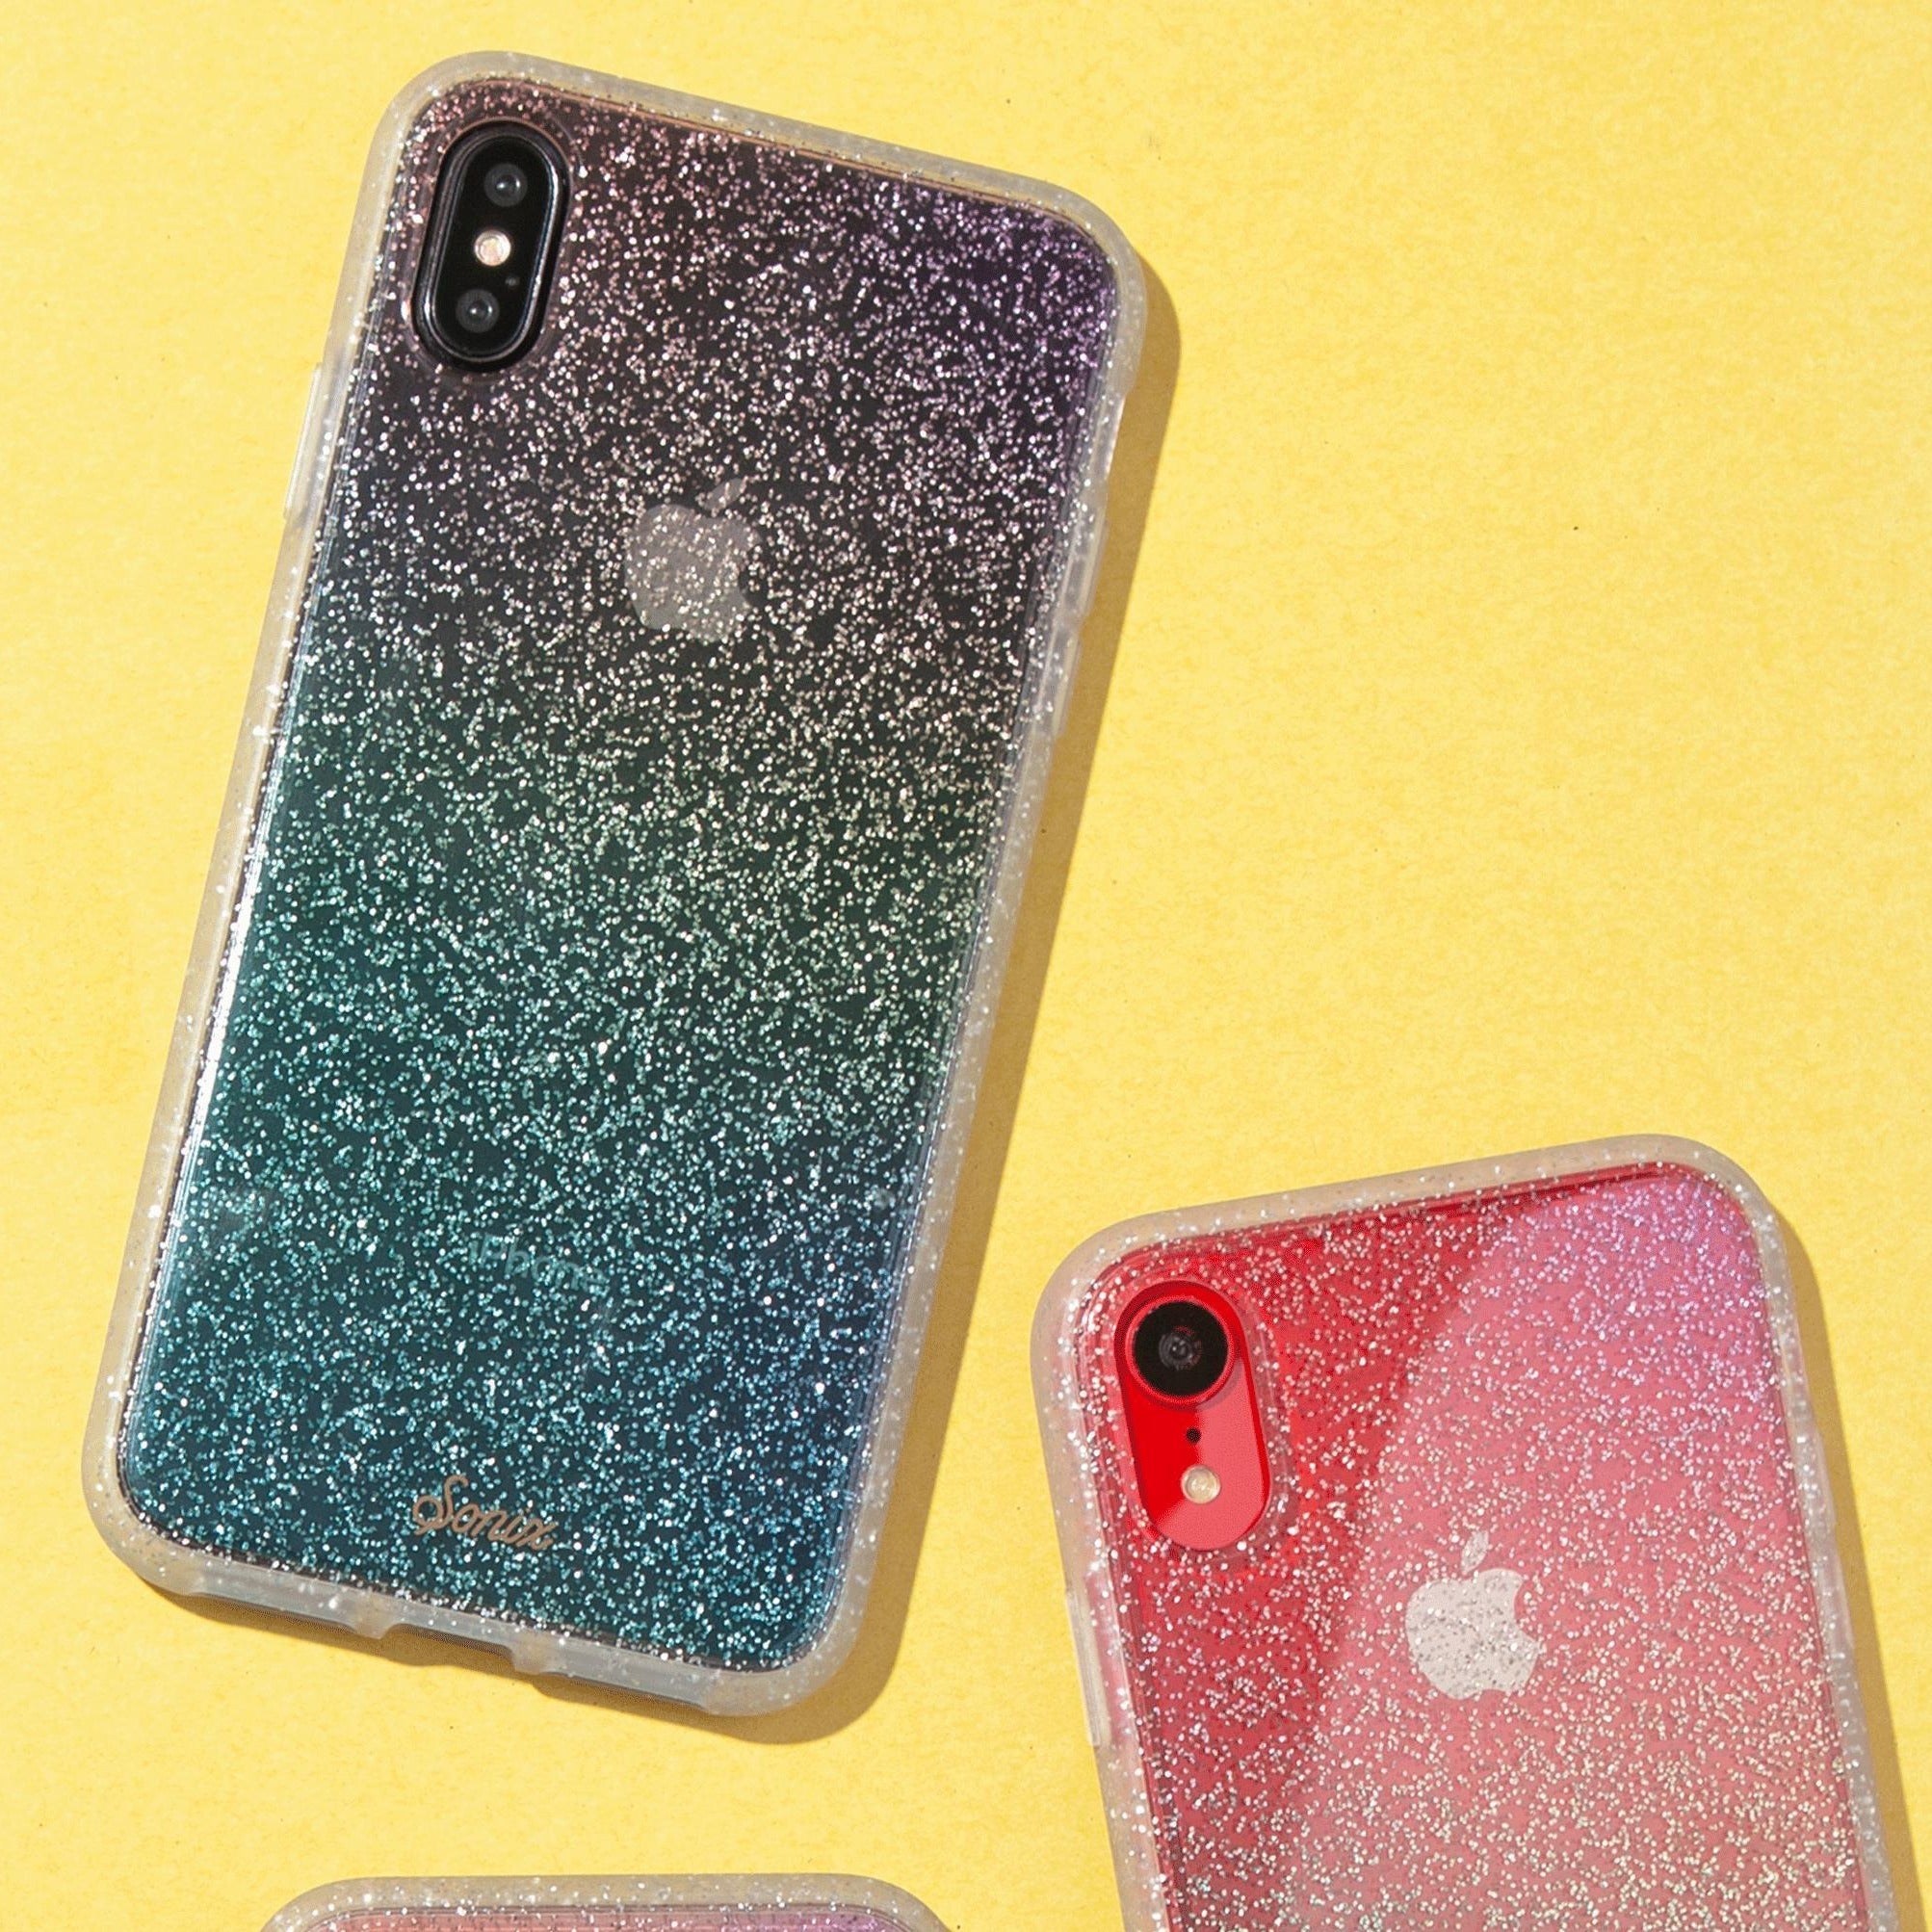 Sonix - Protective case - Rainbow Glitter, iPhone X / XS